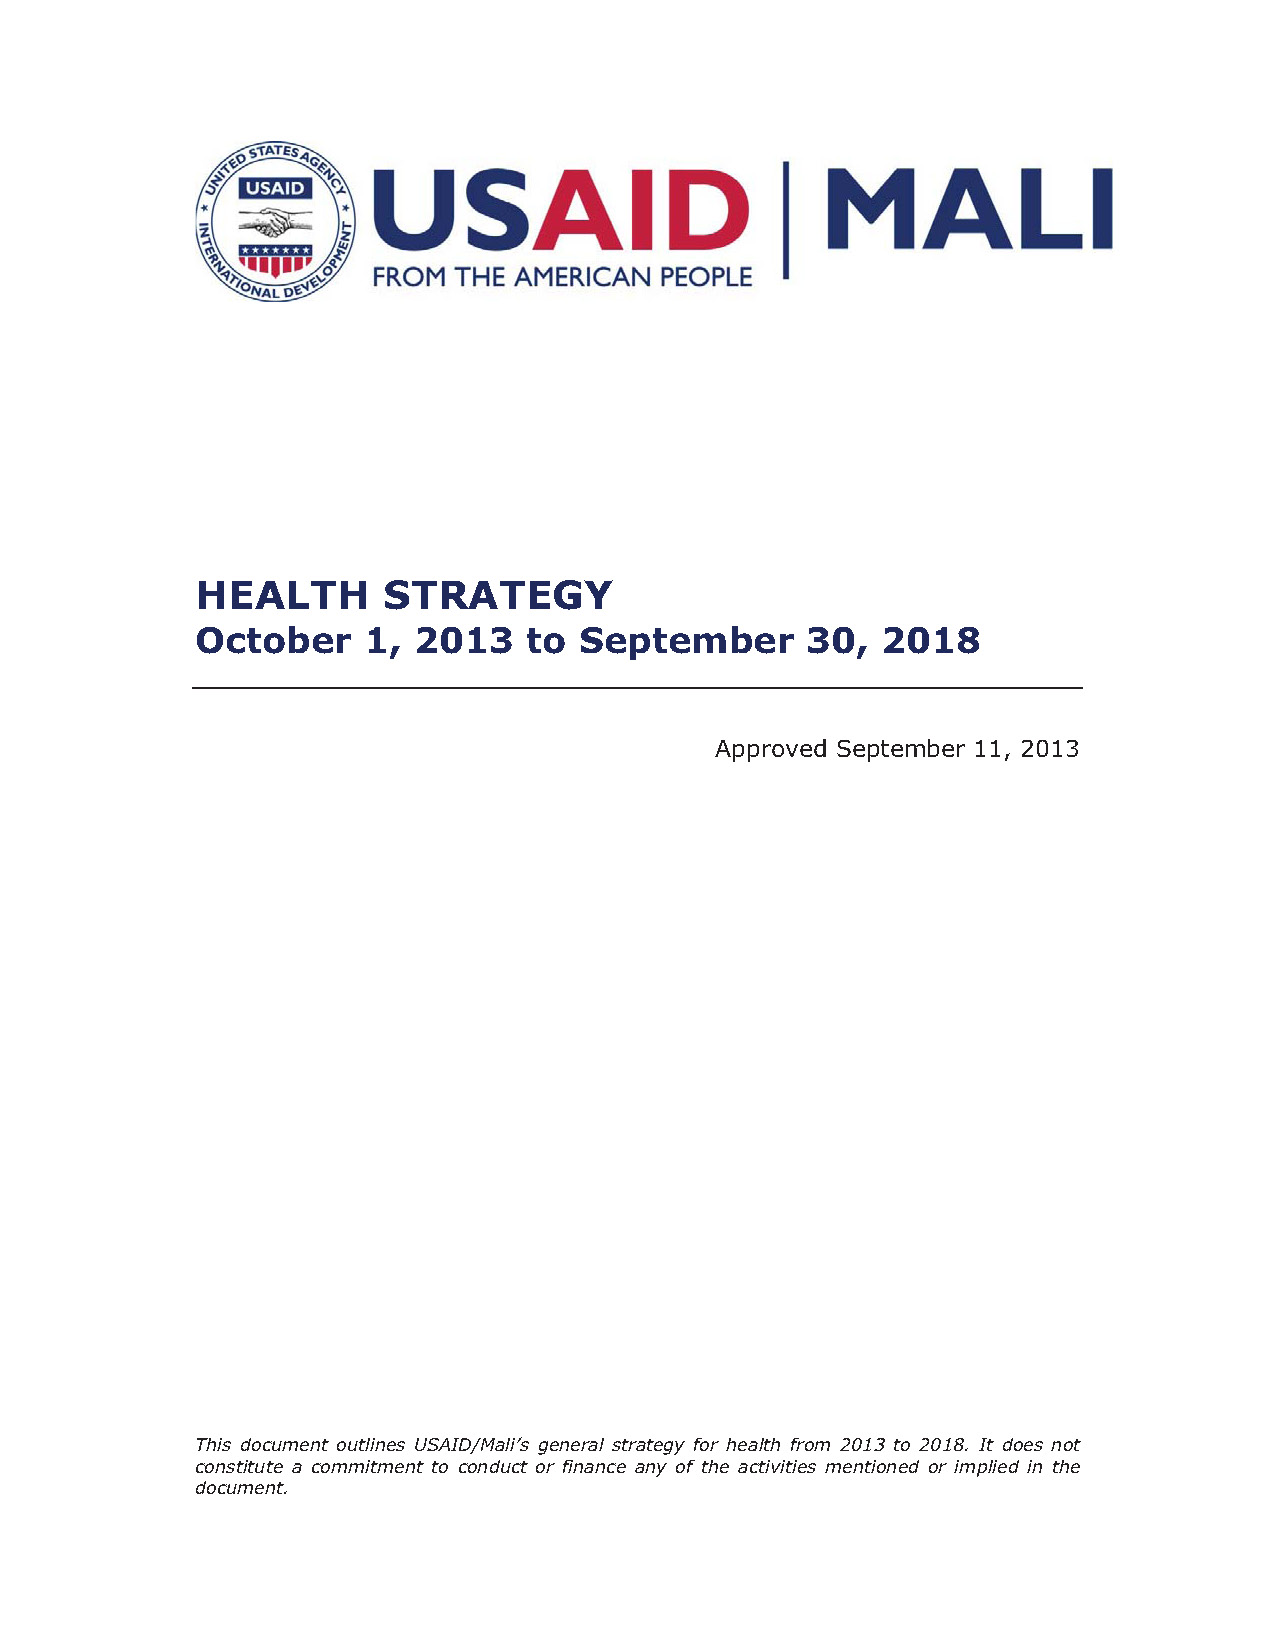 USAID-Mali Health Strategy 2014-2018